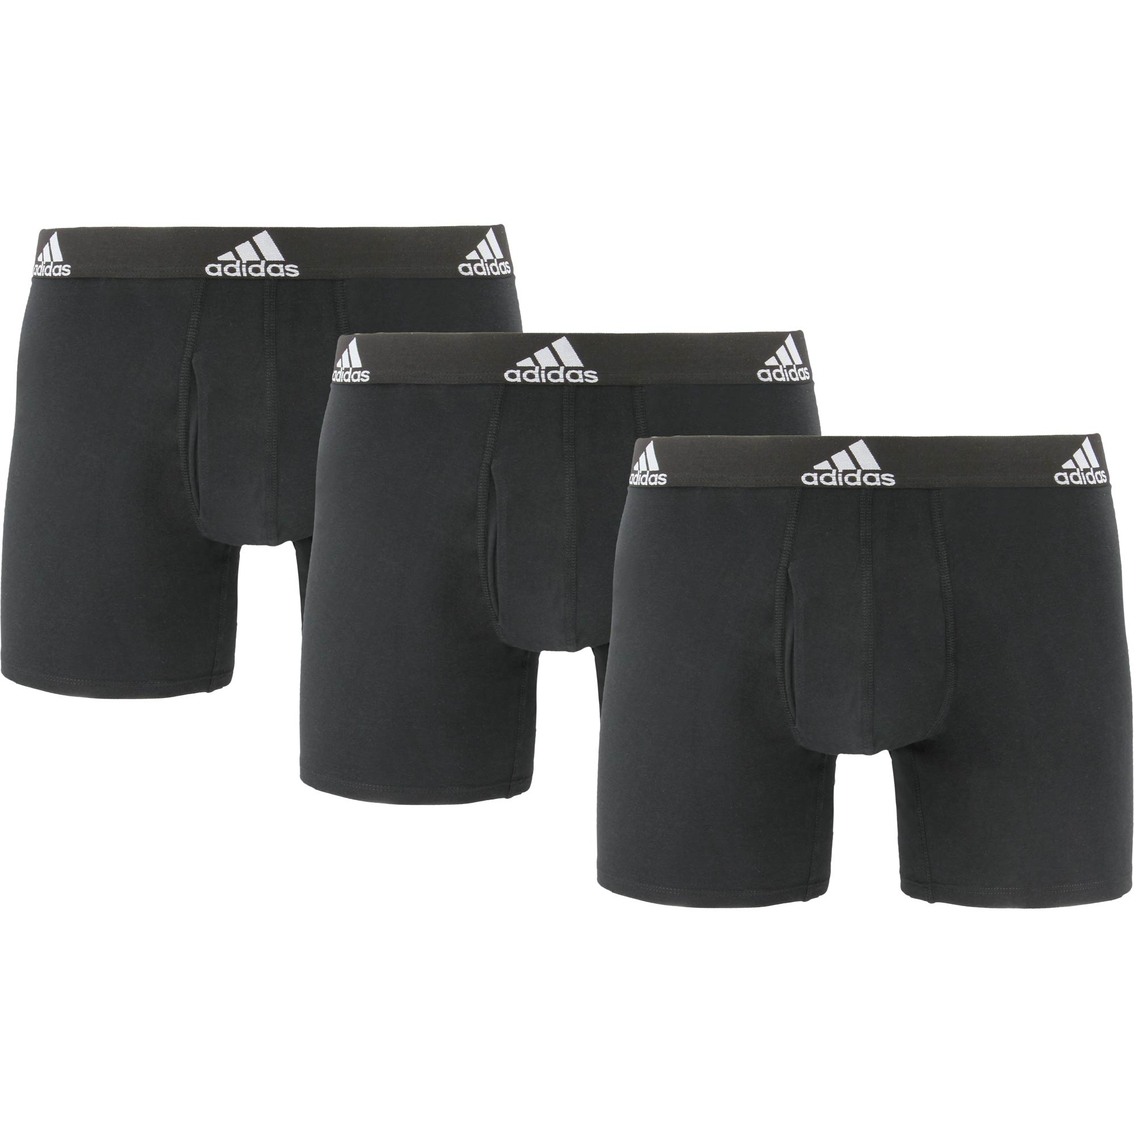 adidas men's boxer shorts